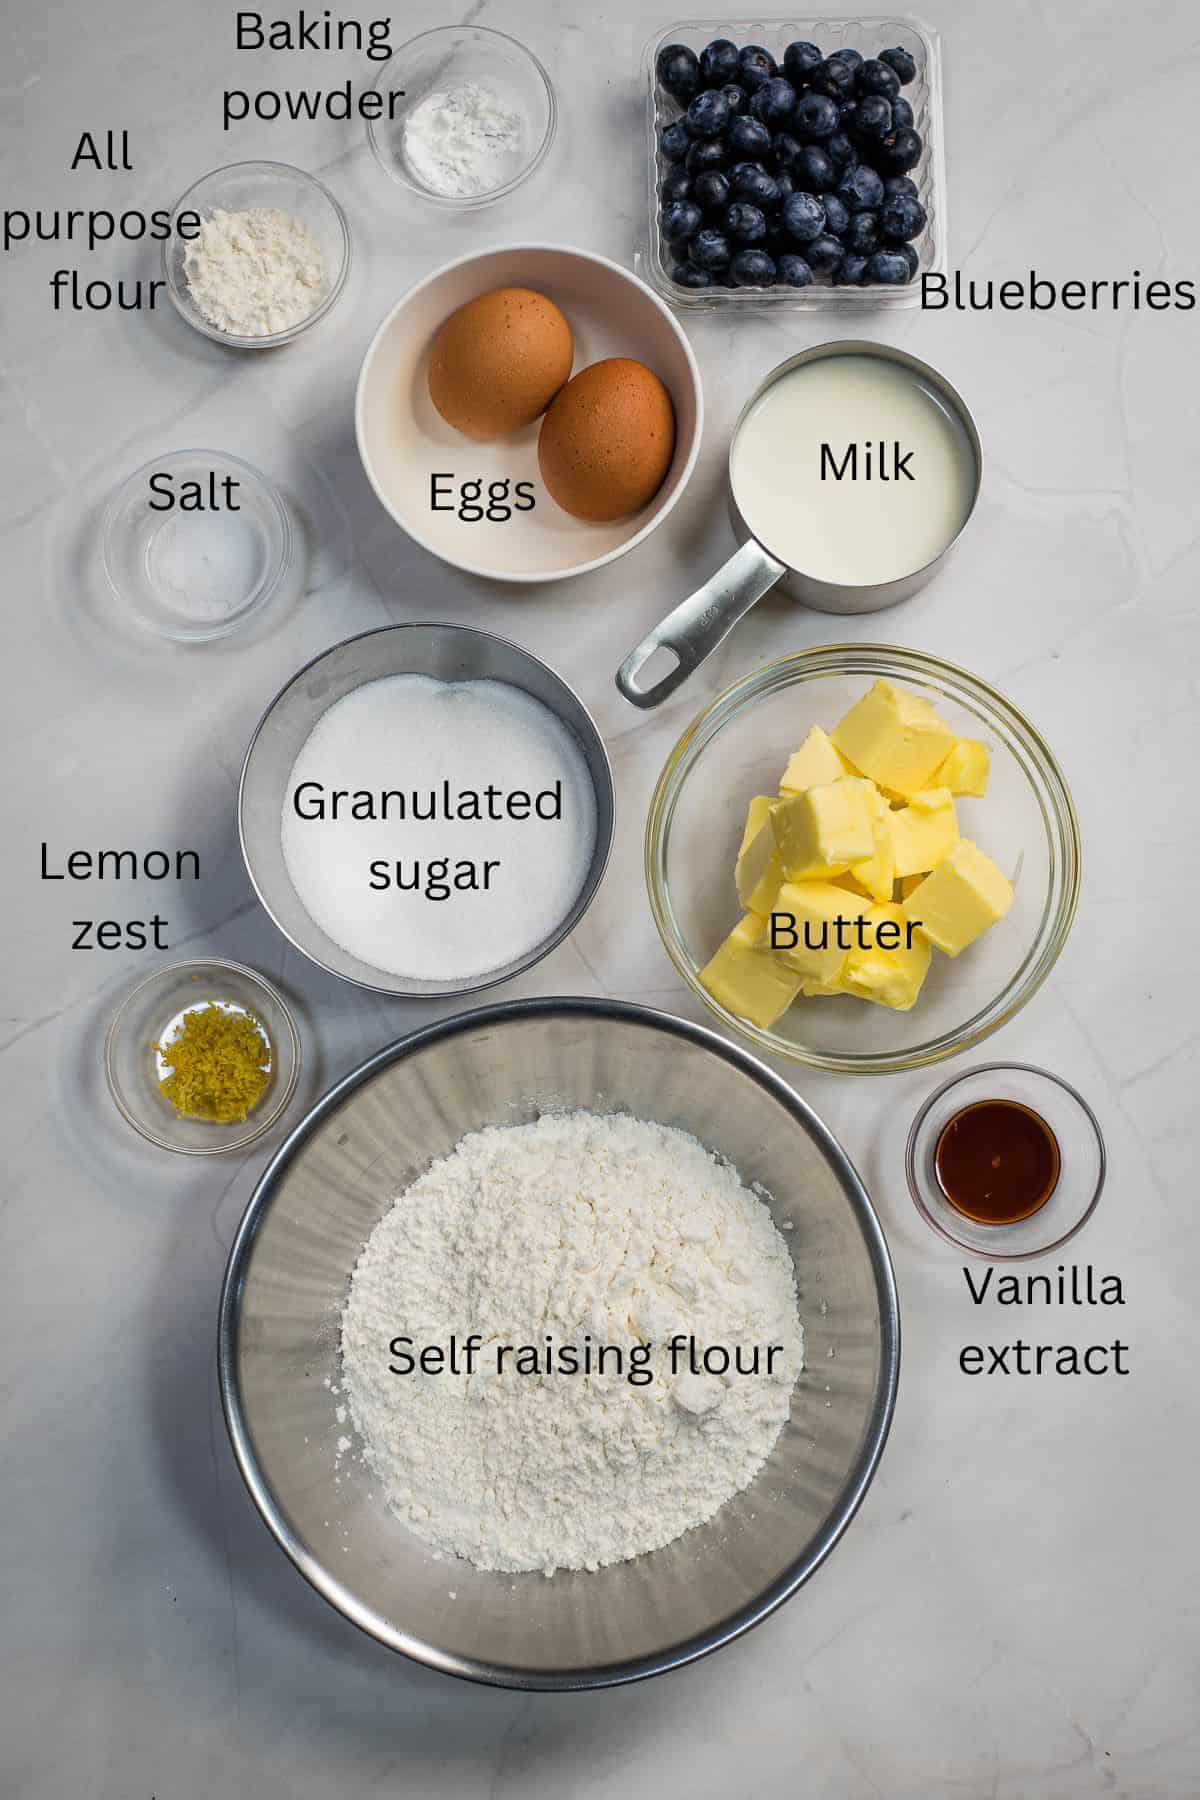 Self raising flour, granulated sugar, butter, eggs, lemon zest, vanilla extract, milk, salt, all purpose flour and blueberries against a marble background.